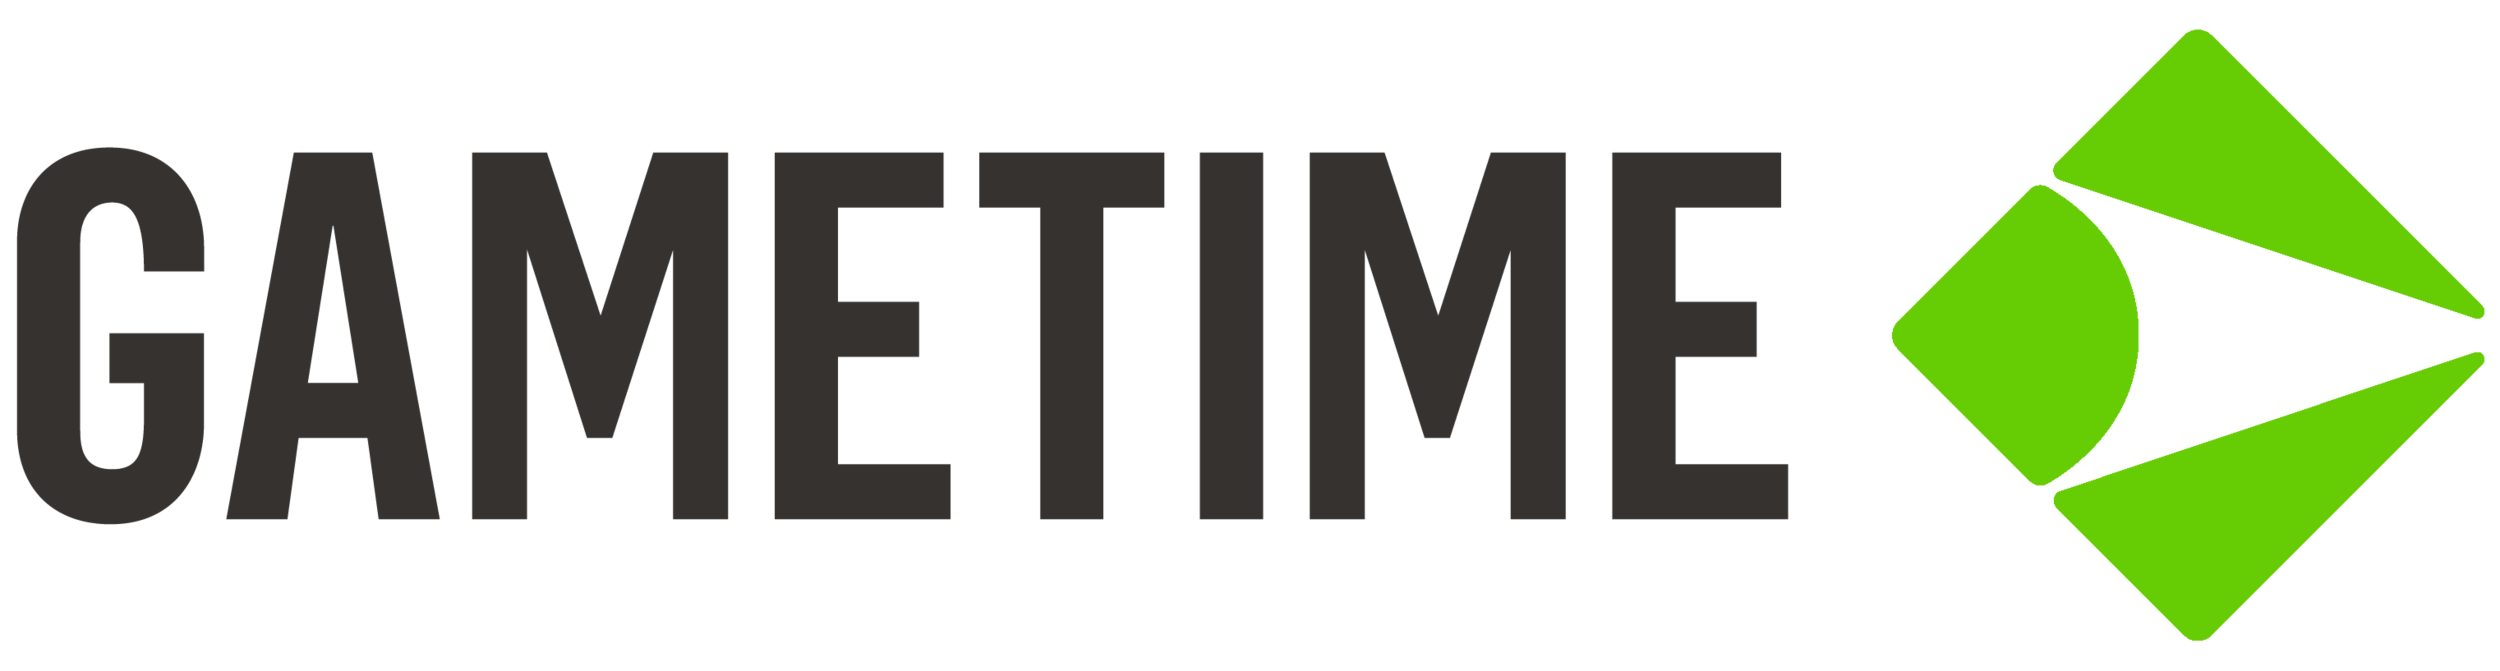 Gametime_Logo.png